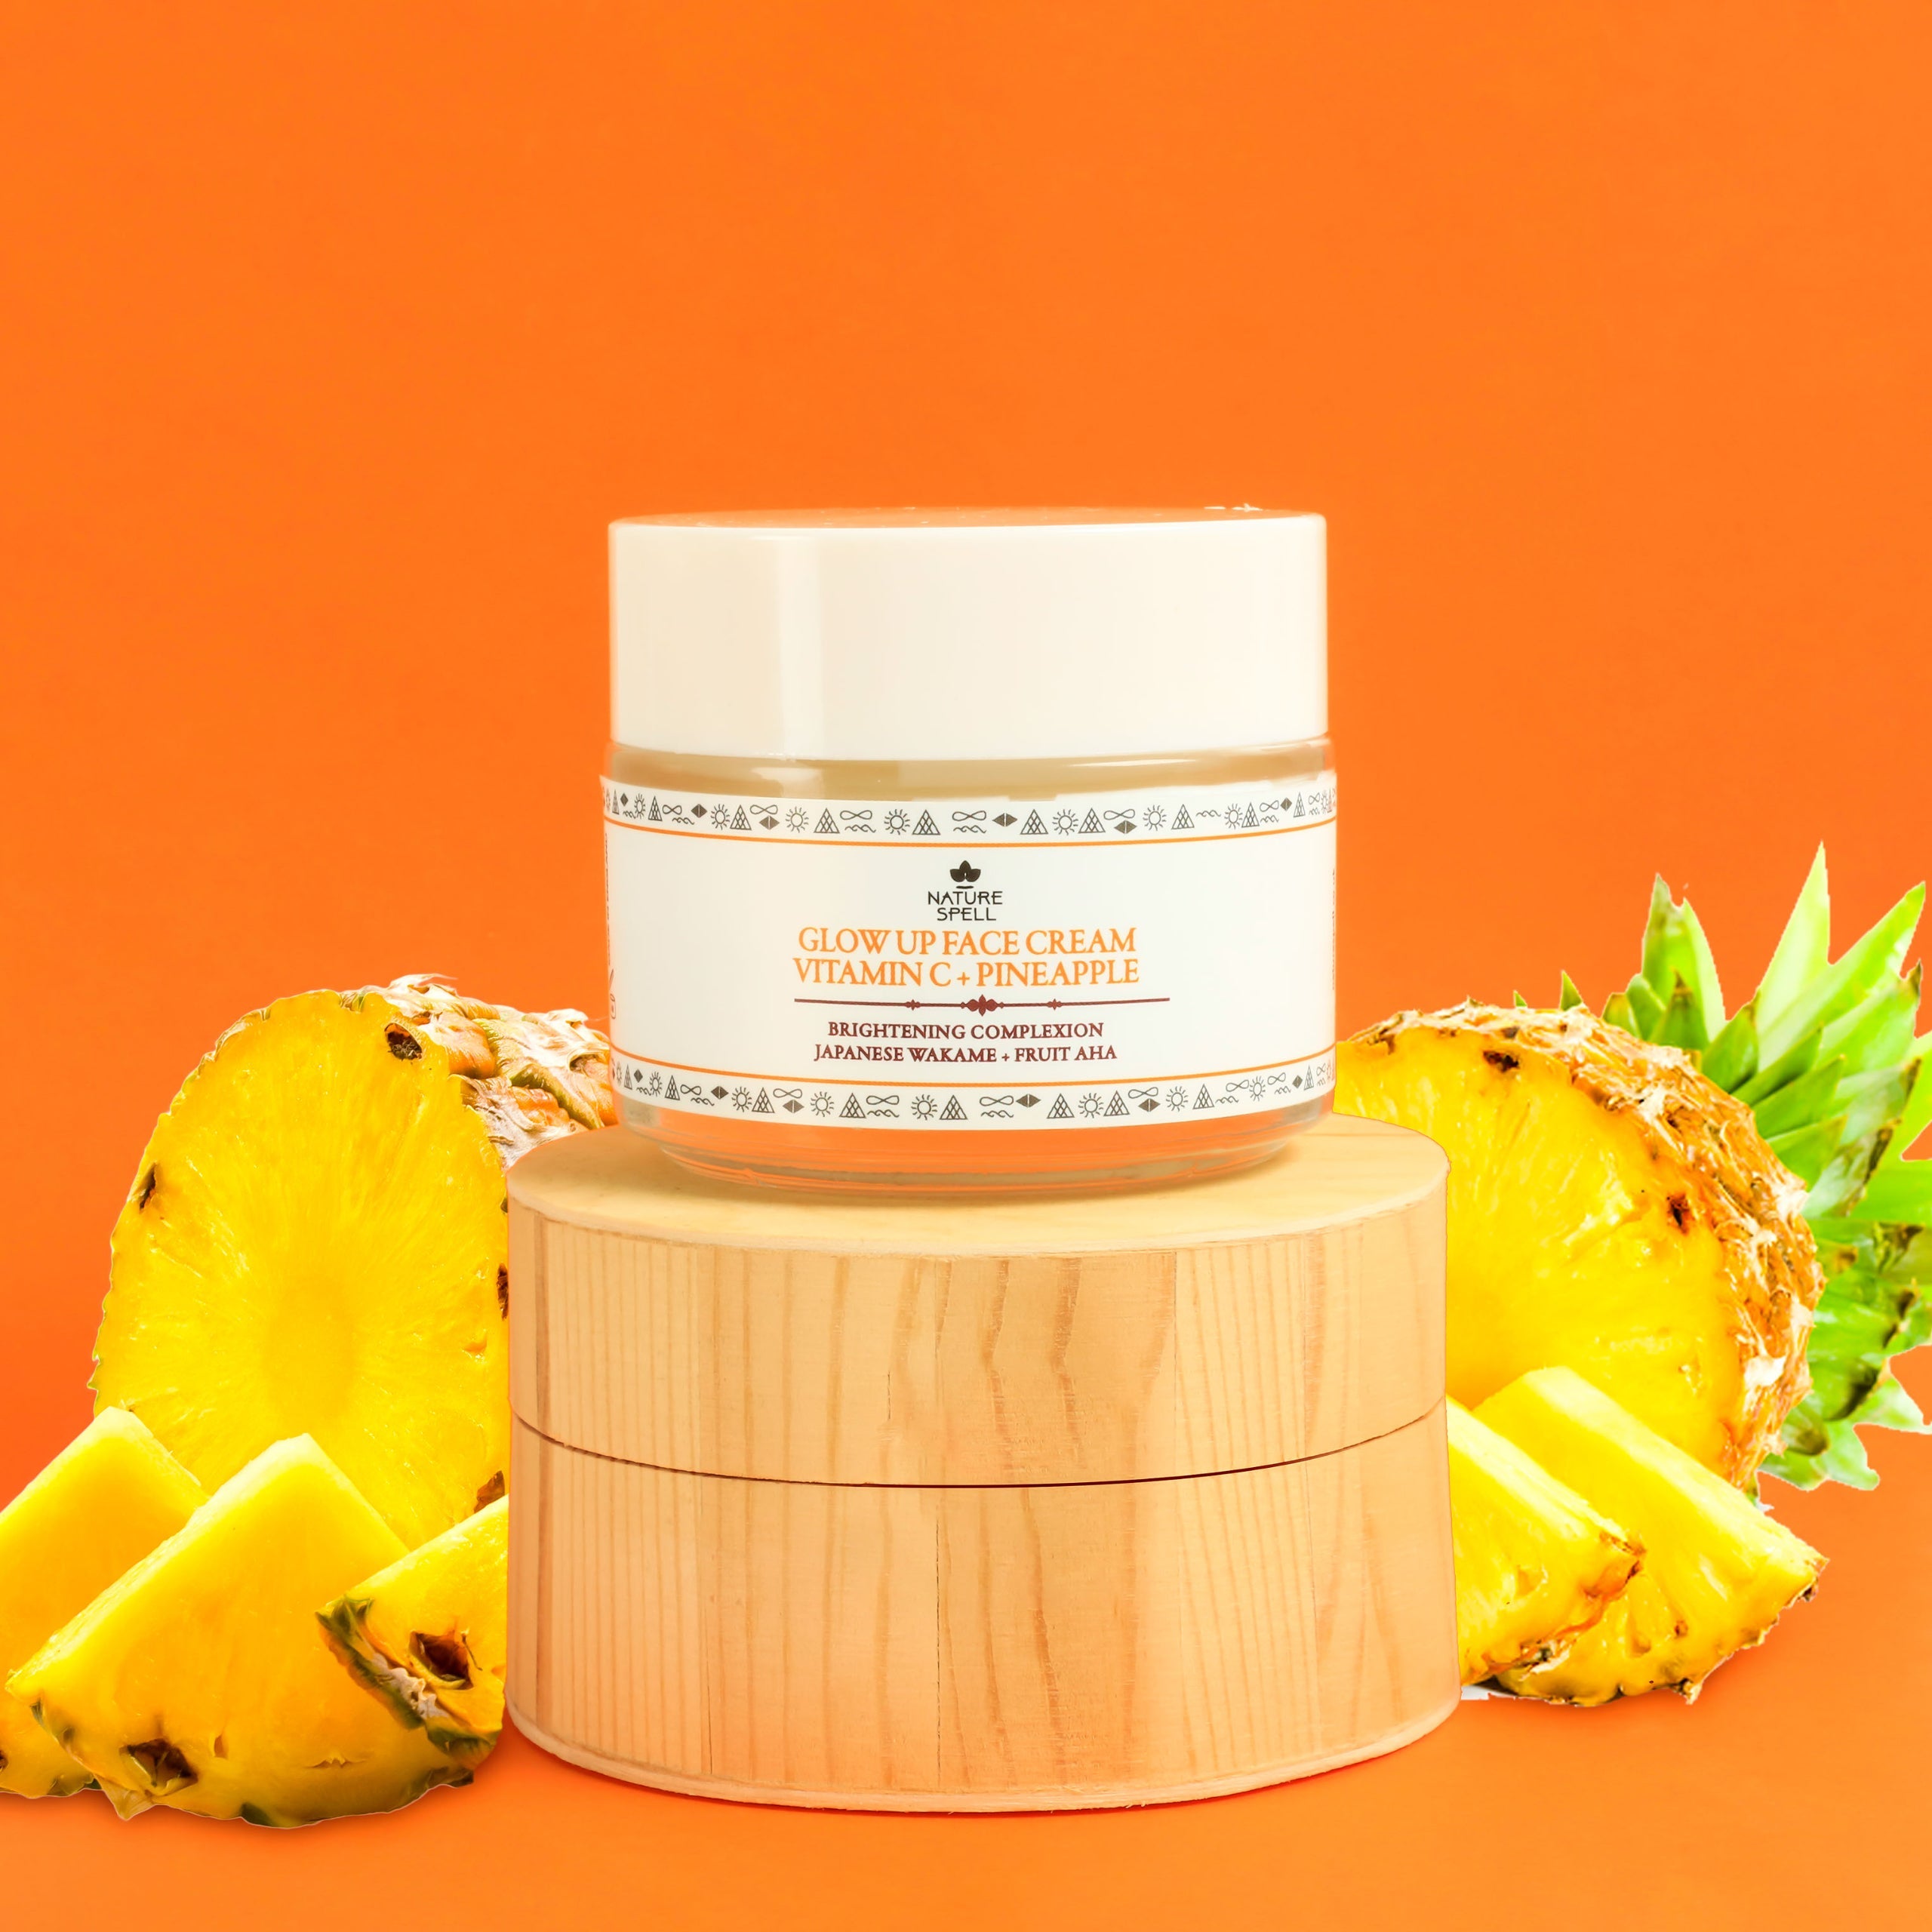 Vitamin C & Pineapple Glow Up Face Cream